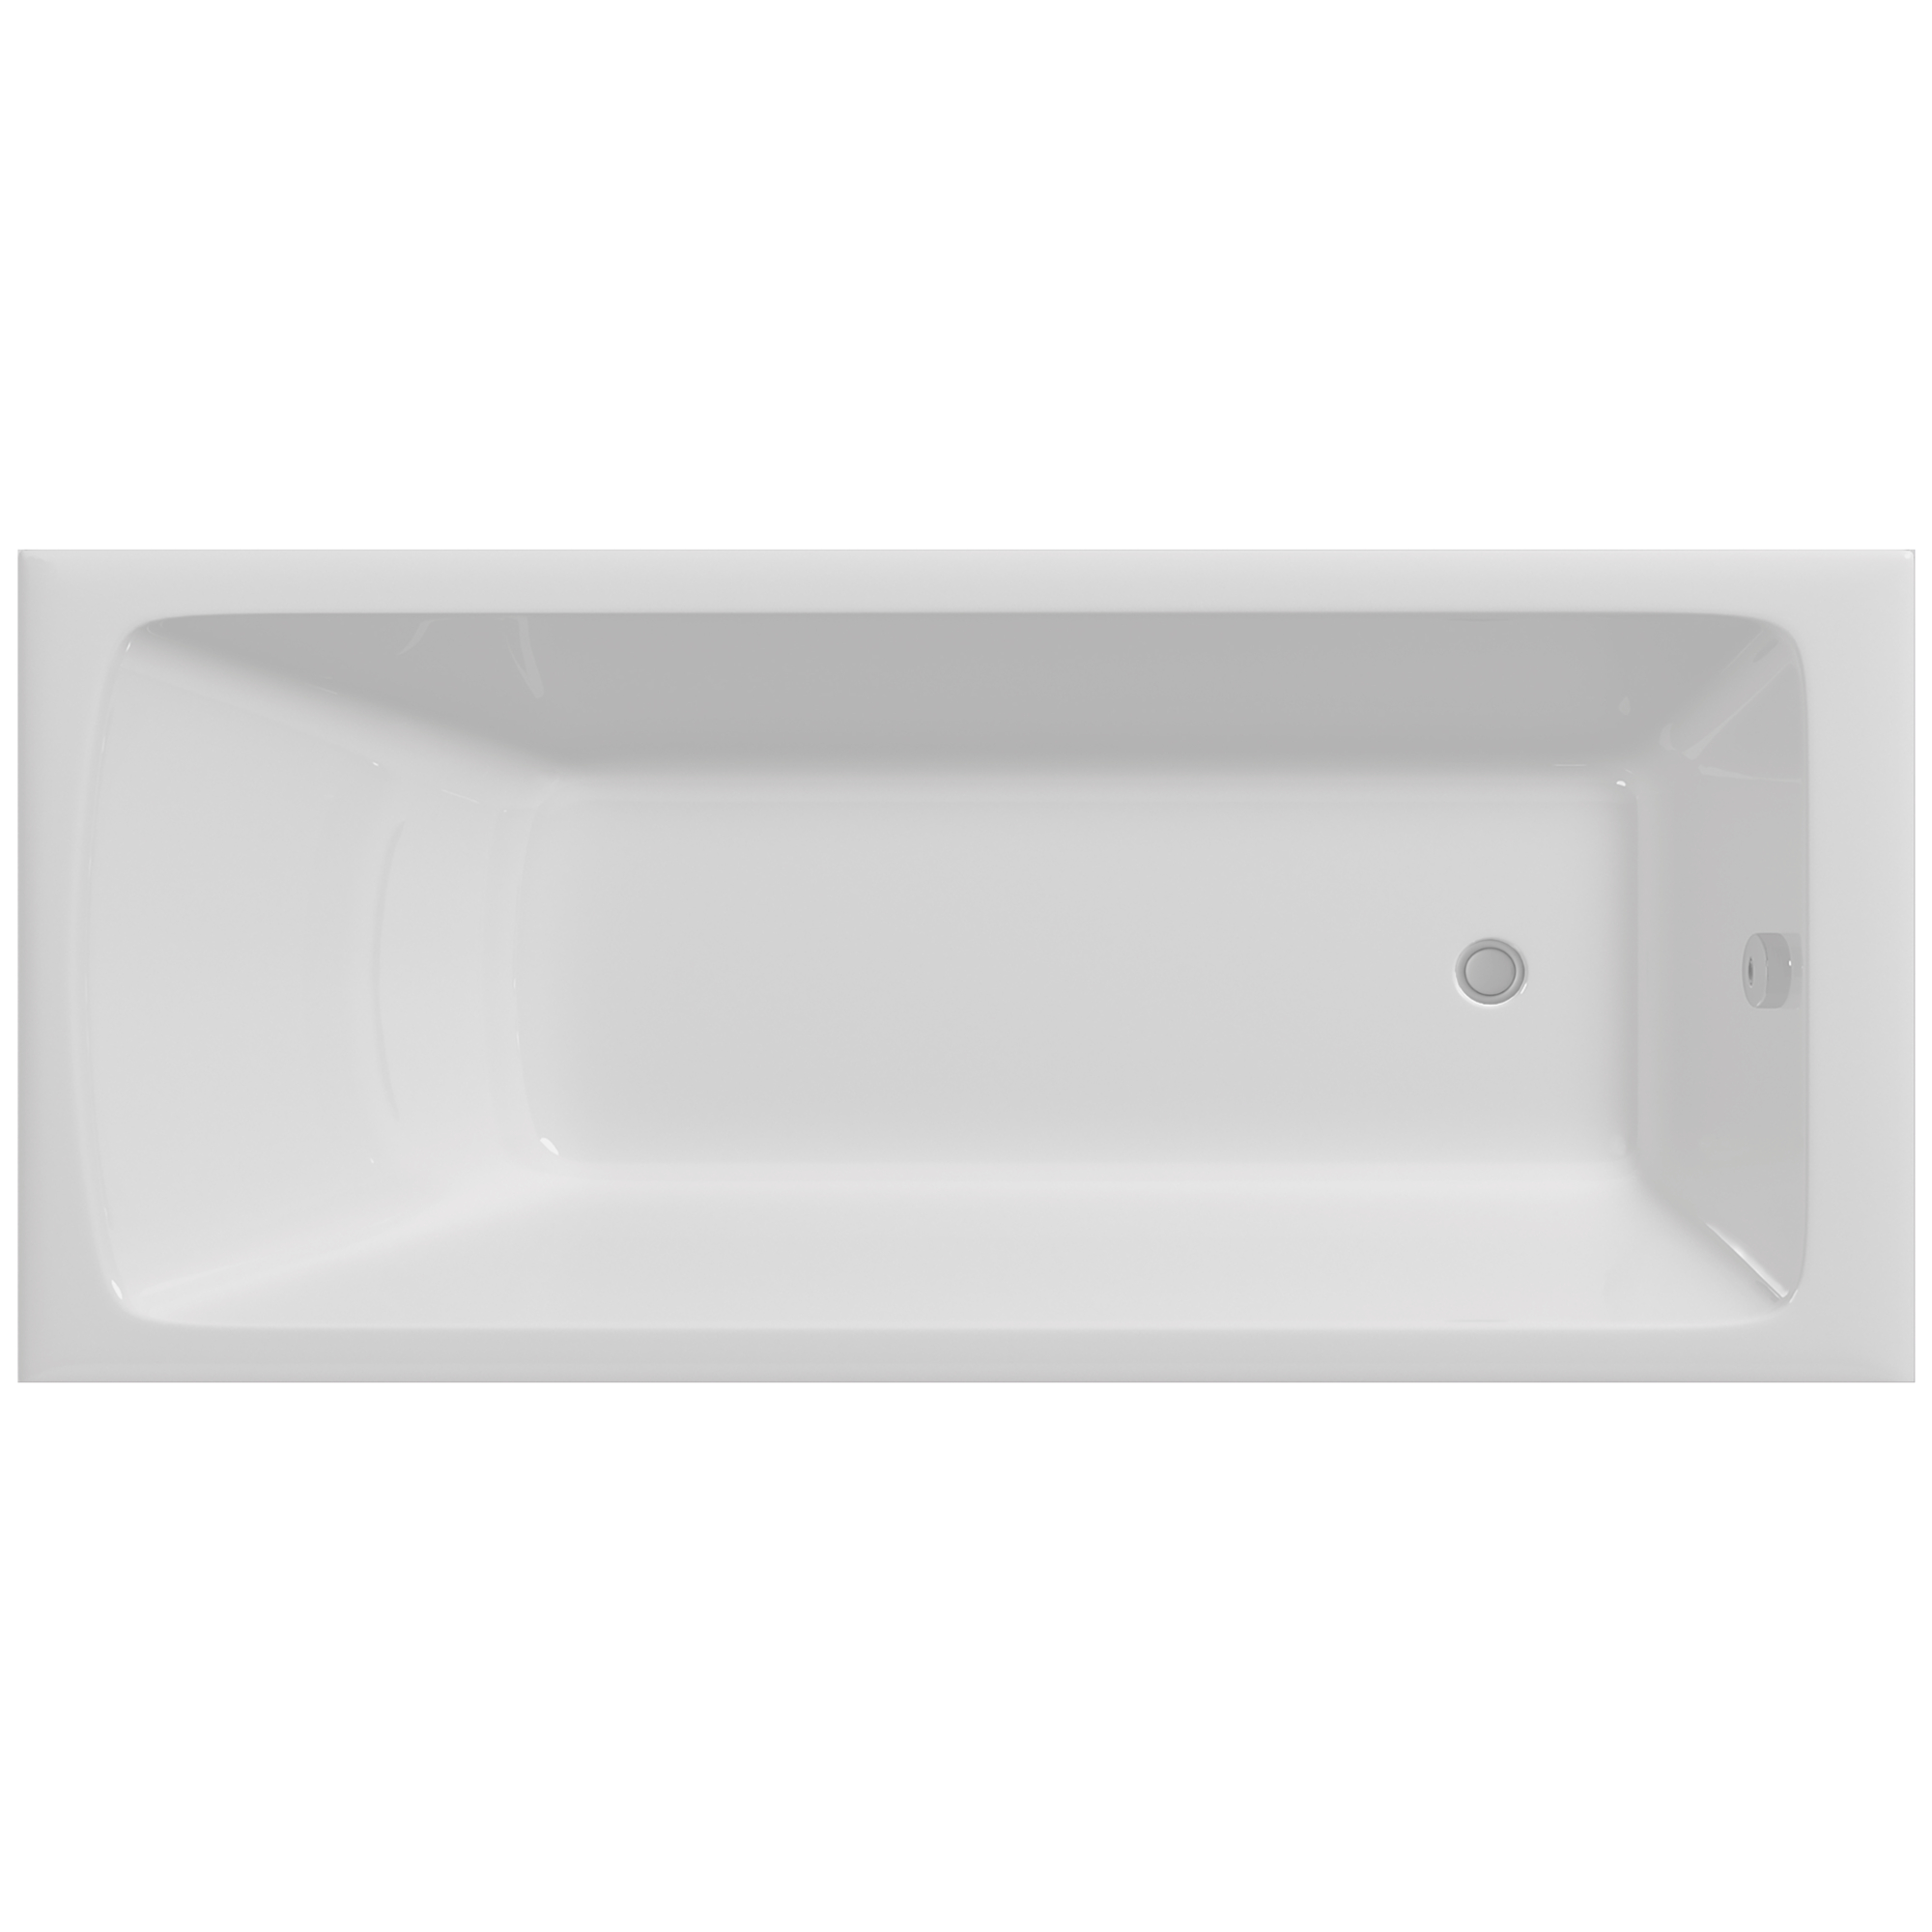 Чугунная ванна Delice Camelot 180х80 DLR230616 ванна из литьевого мрамора и стиль риспекта 180х80